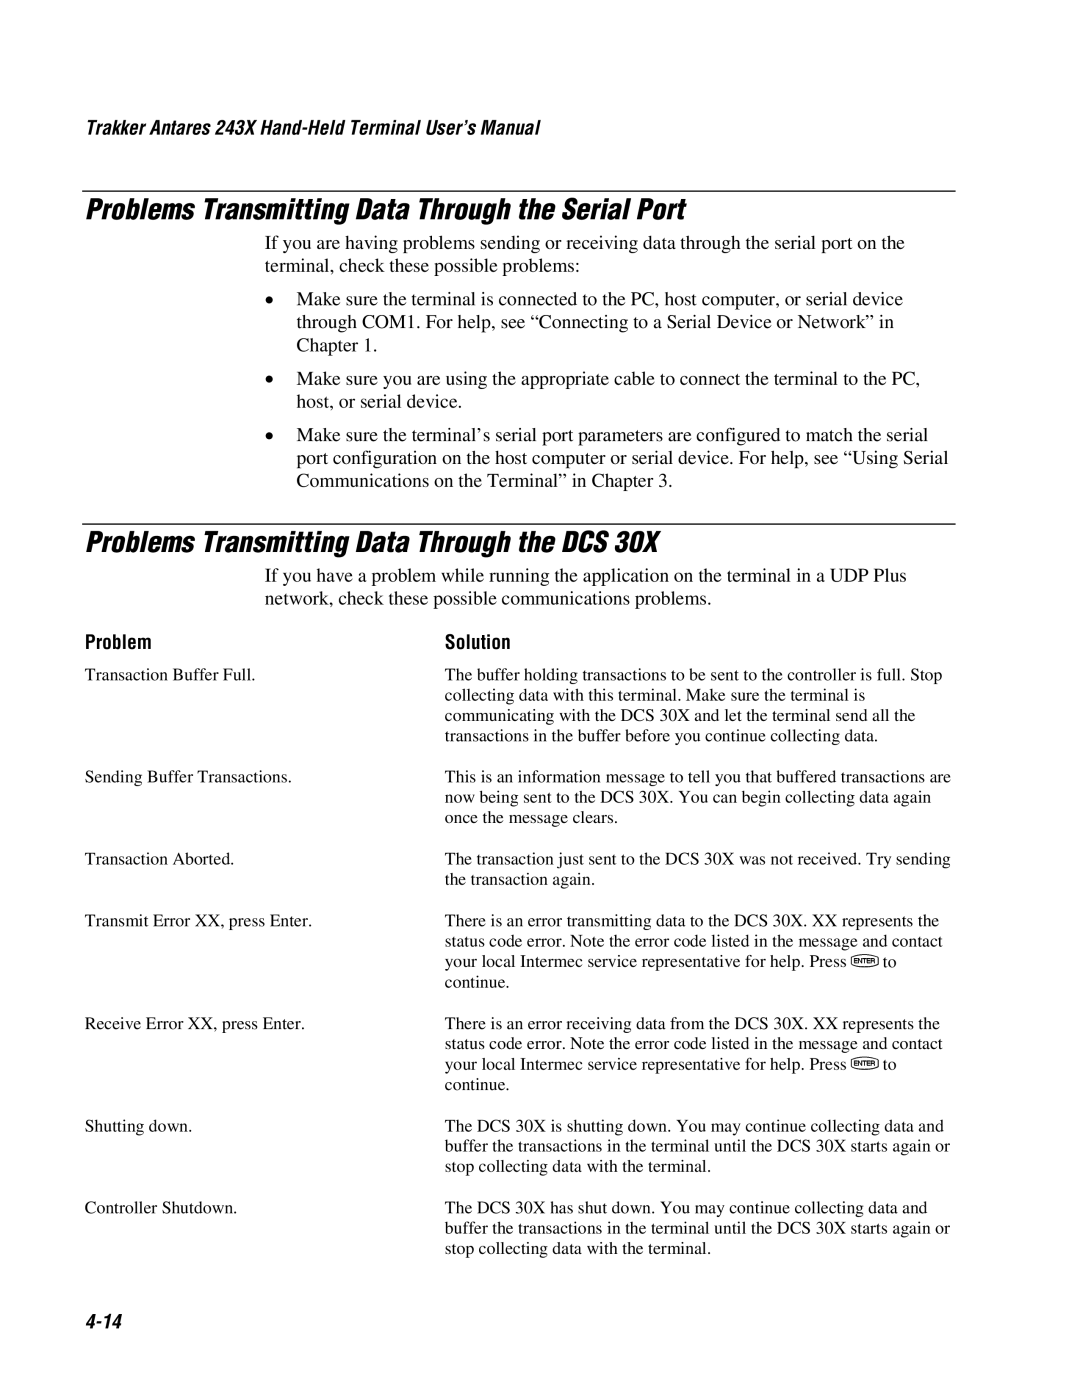 IBM 243X Problems Transmitting Data Through the Serial Port, Problems Transmitting Data Through the DCS, 4-14, Solution 